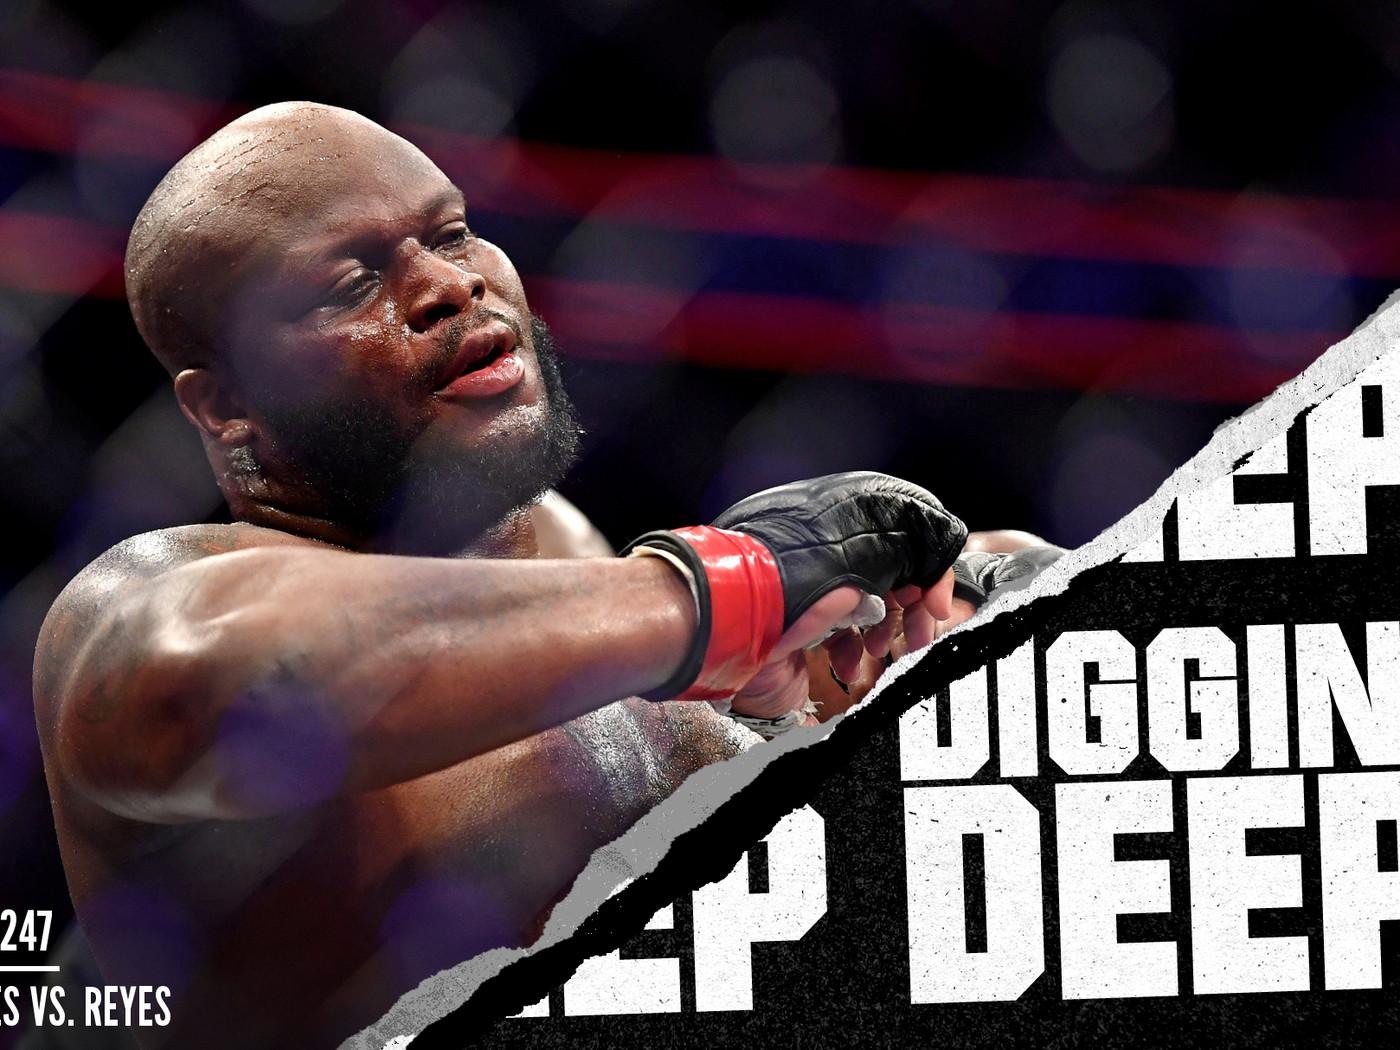 Diggin' Deep on UFC 247: Jones vs. Reyes card preview